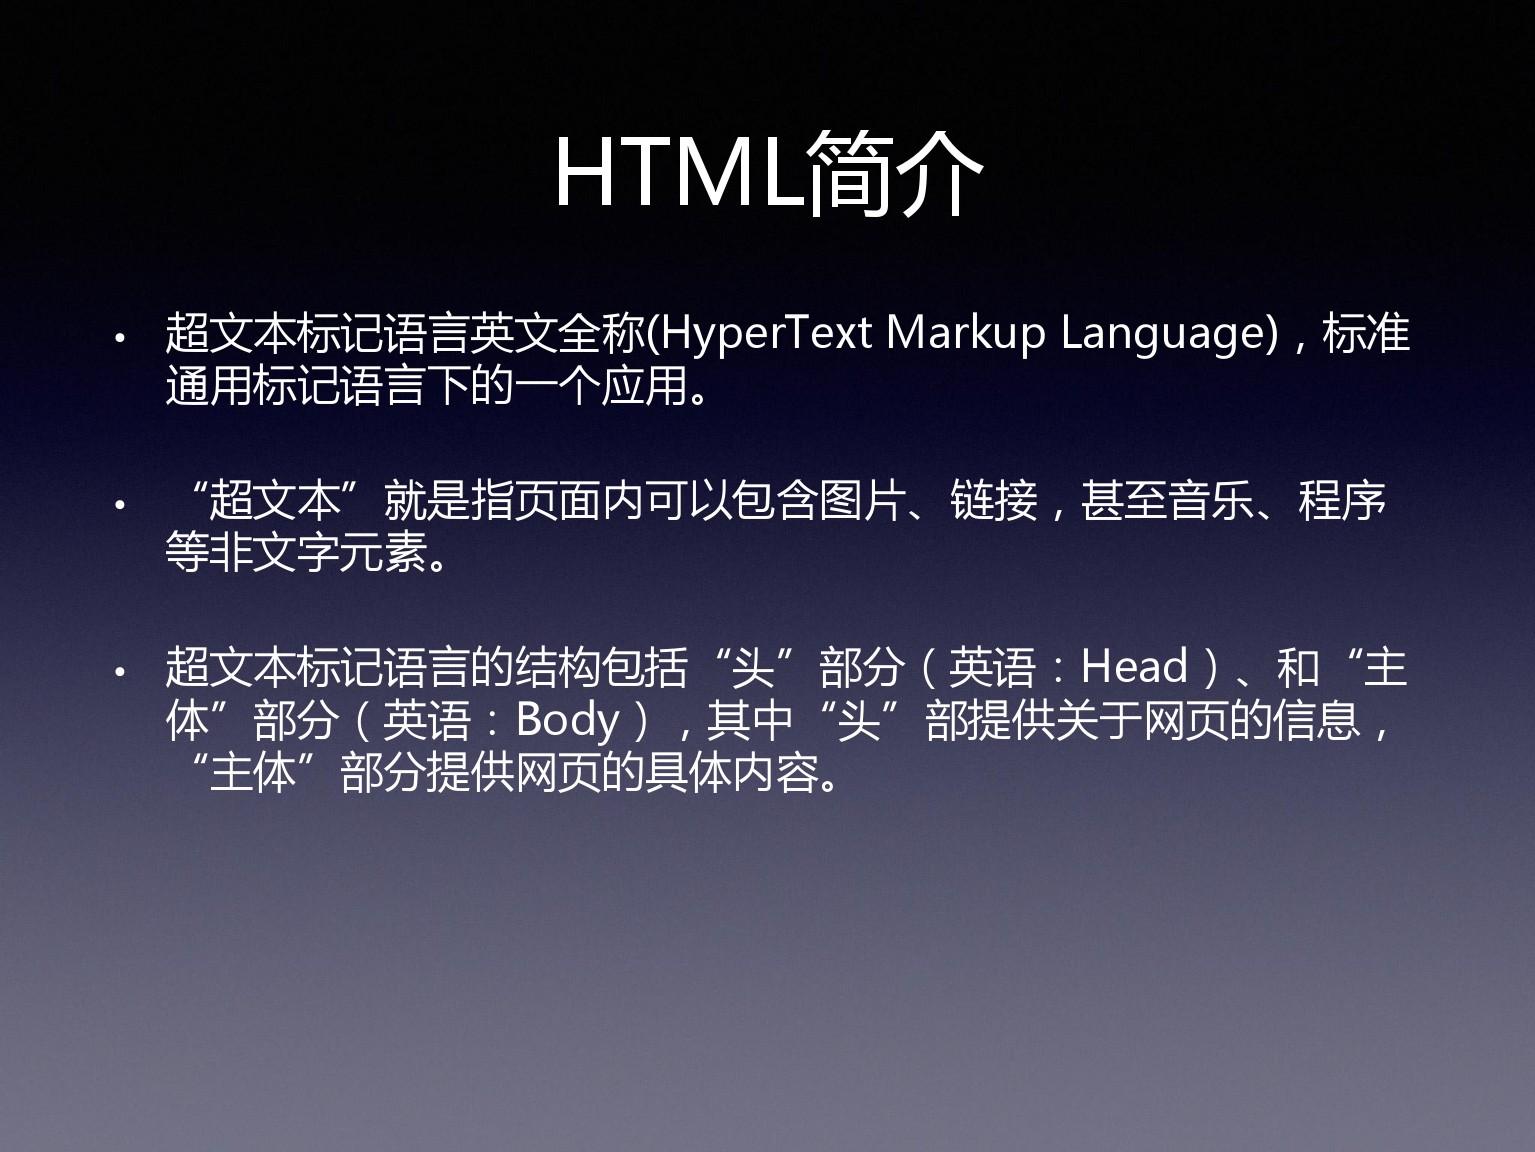 HTML5基本概念简介